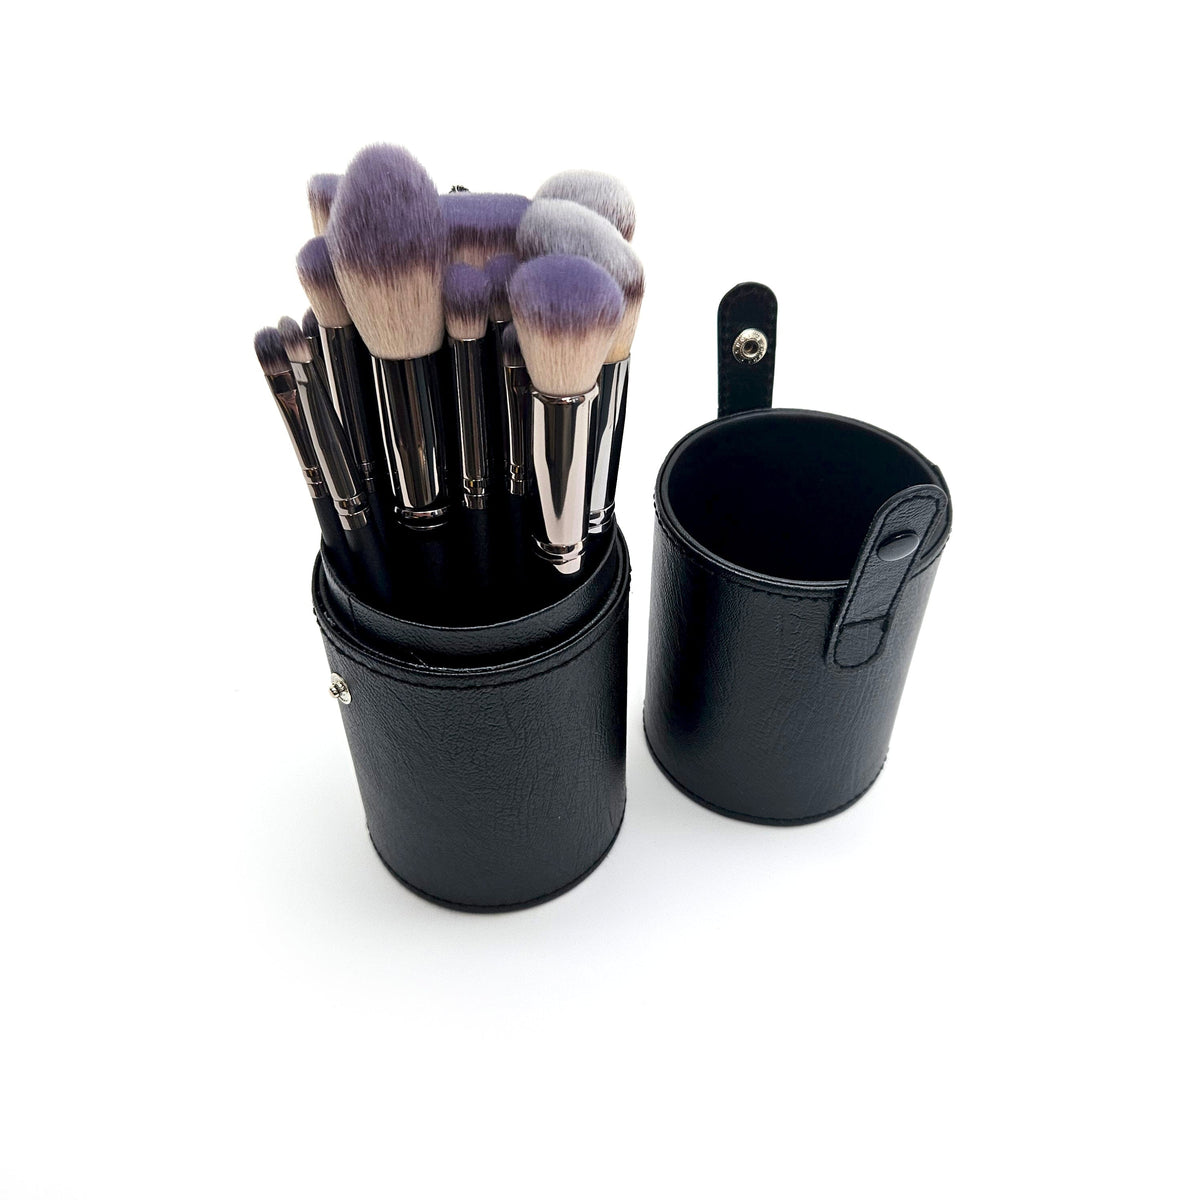 15-Piece Make Up Brush Set with Black Cylinder Case